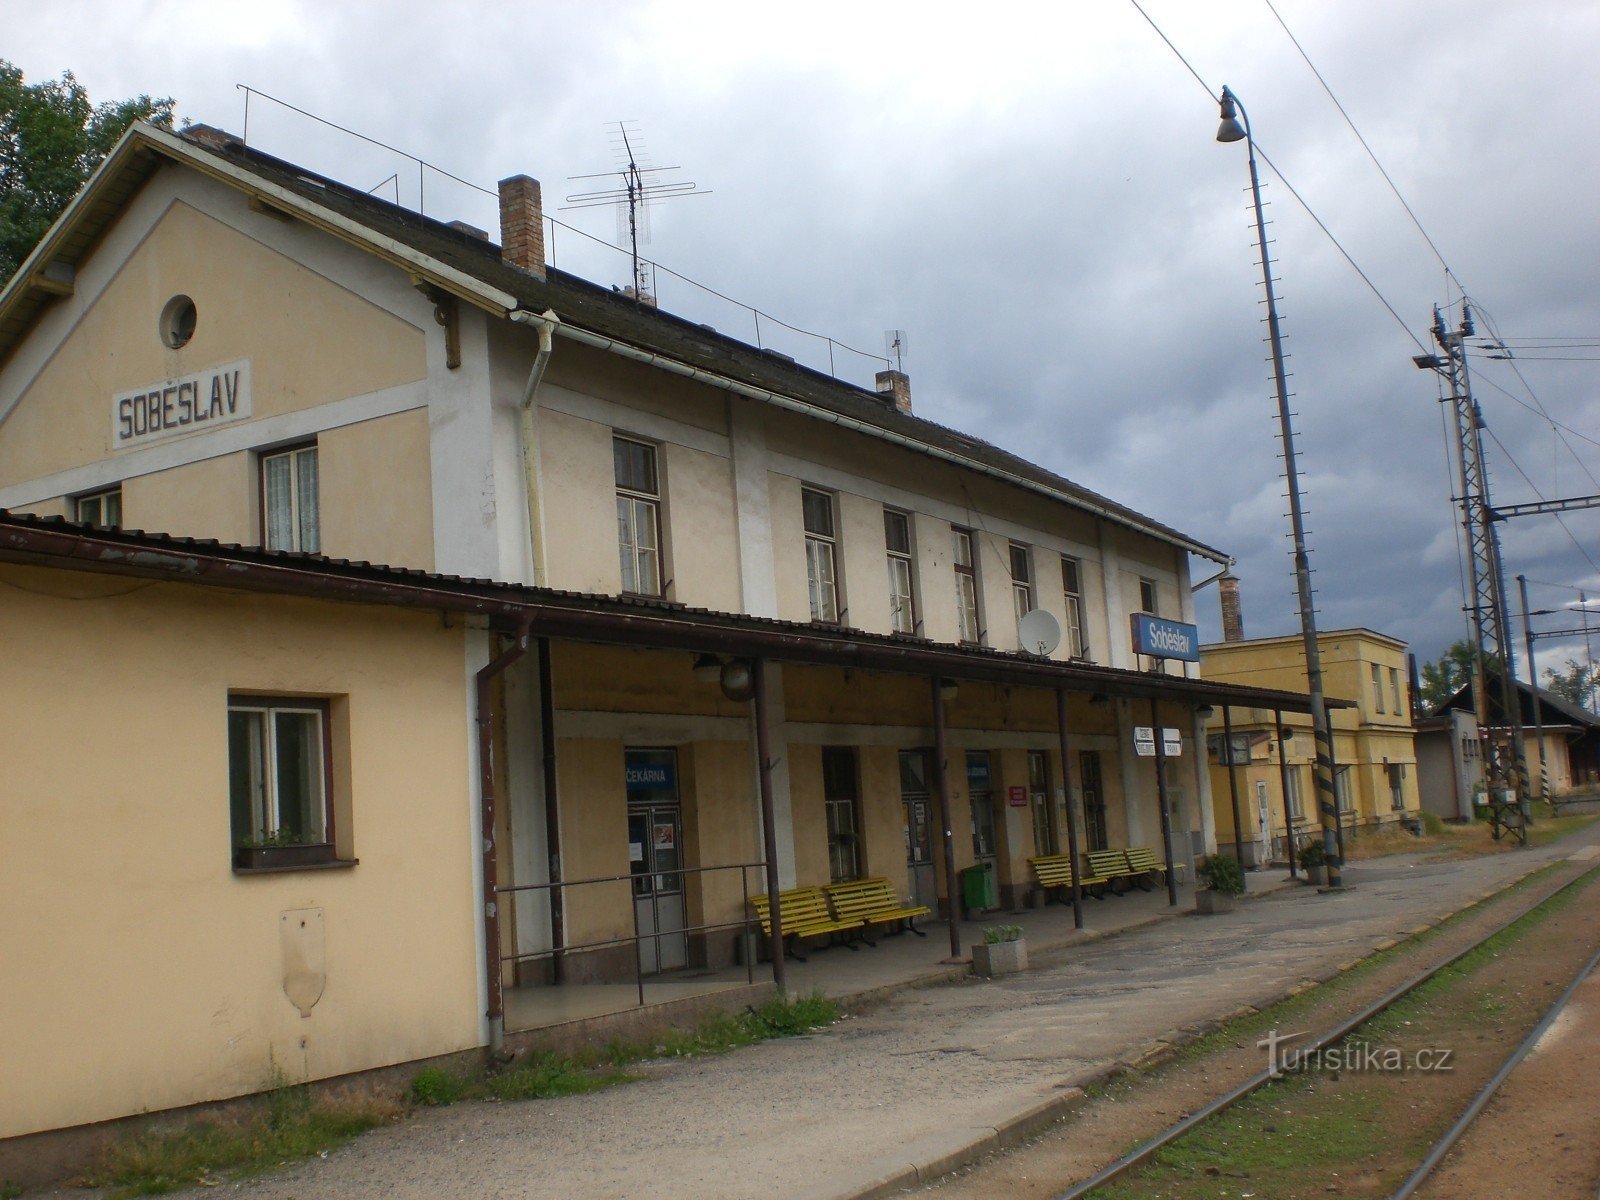 Soběslav - railway station